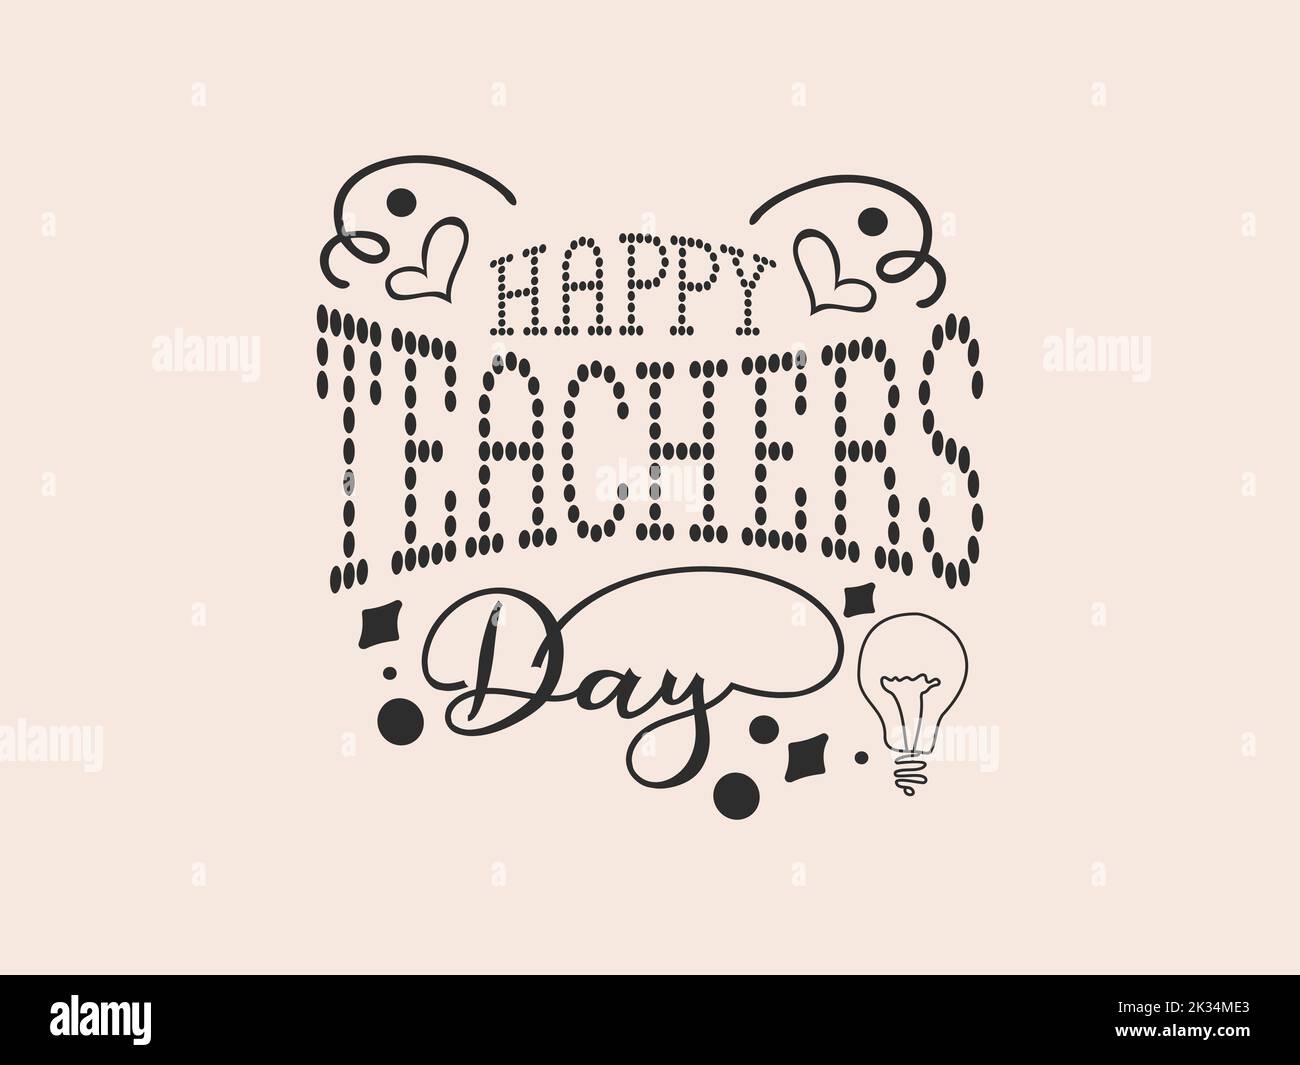 Happy teachers day vector Calligraphy design with creative doodle celebration Stock Vector